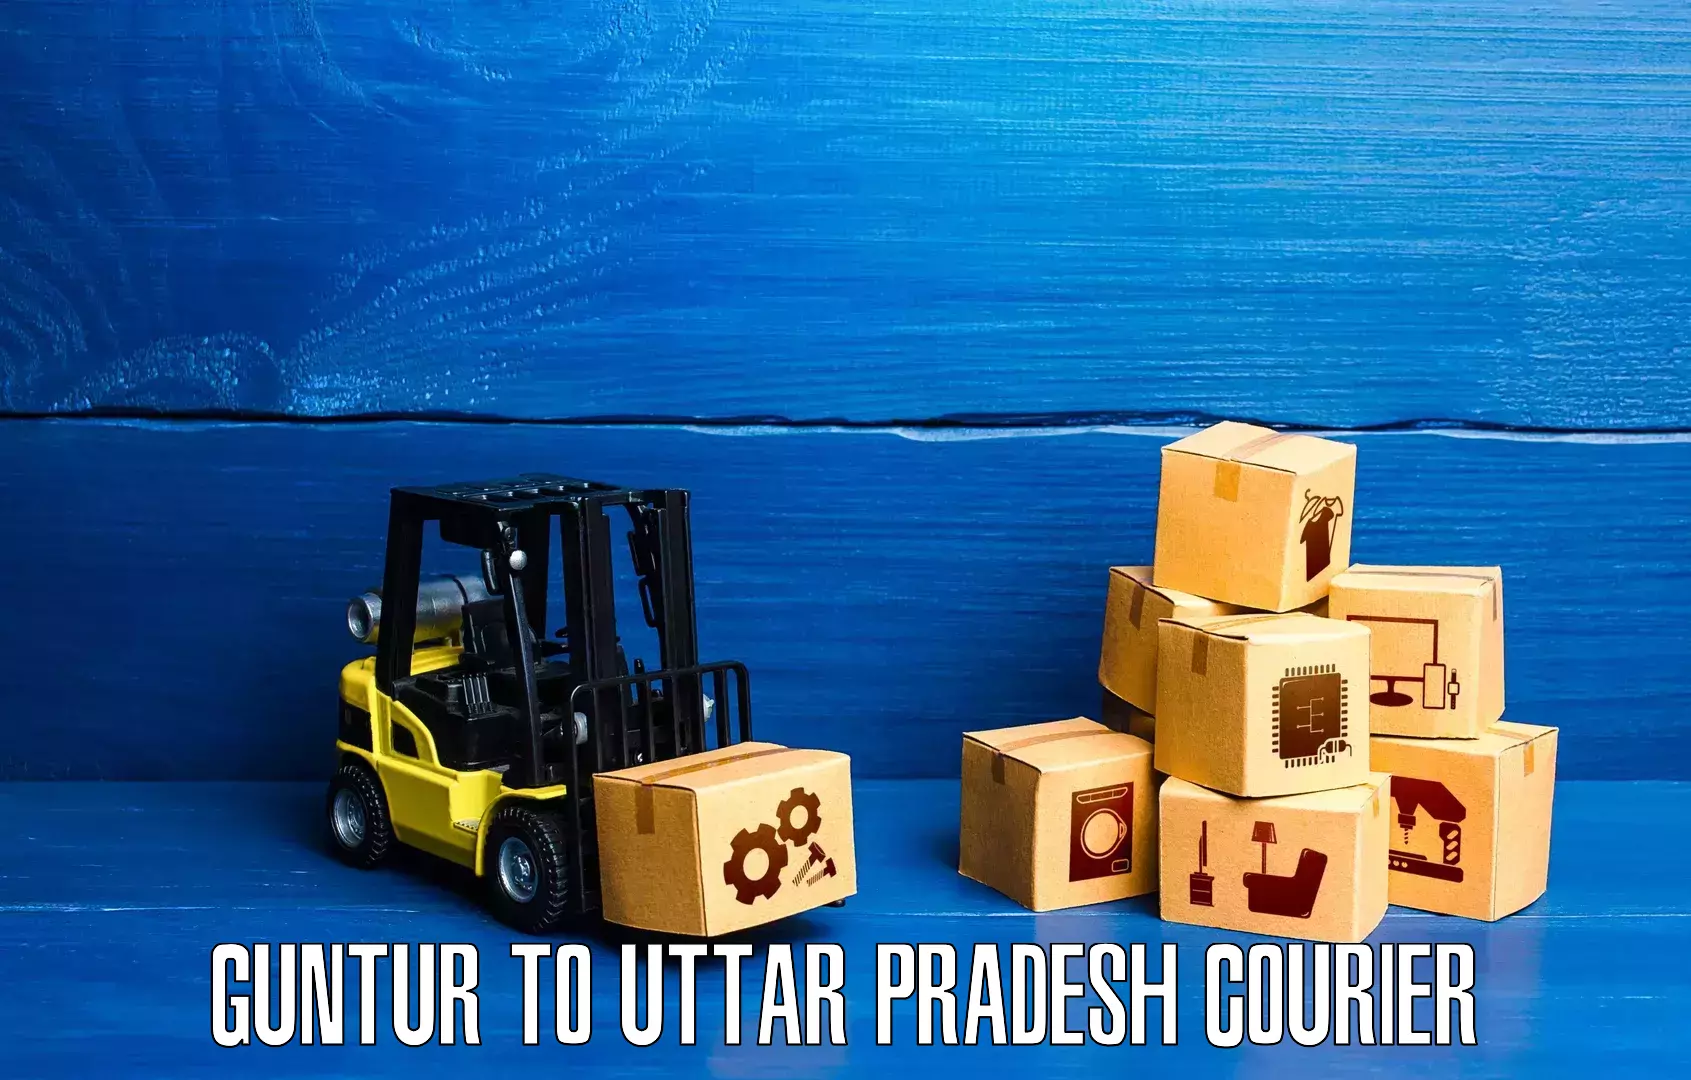 Supply chain efficiency in Guntur to Anpara